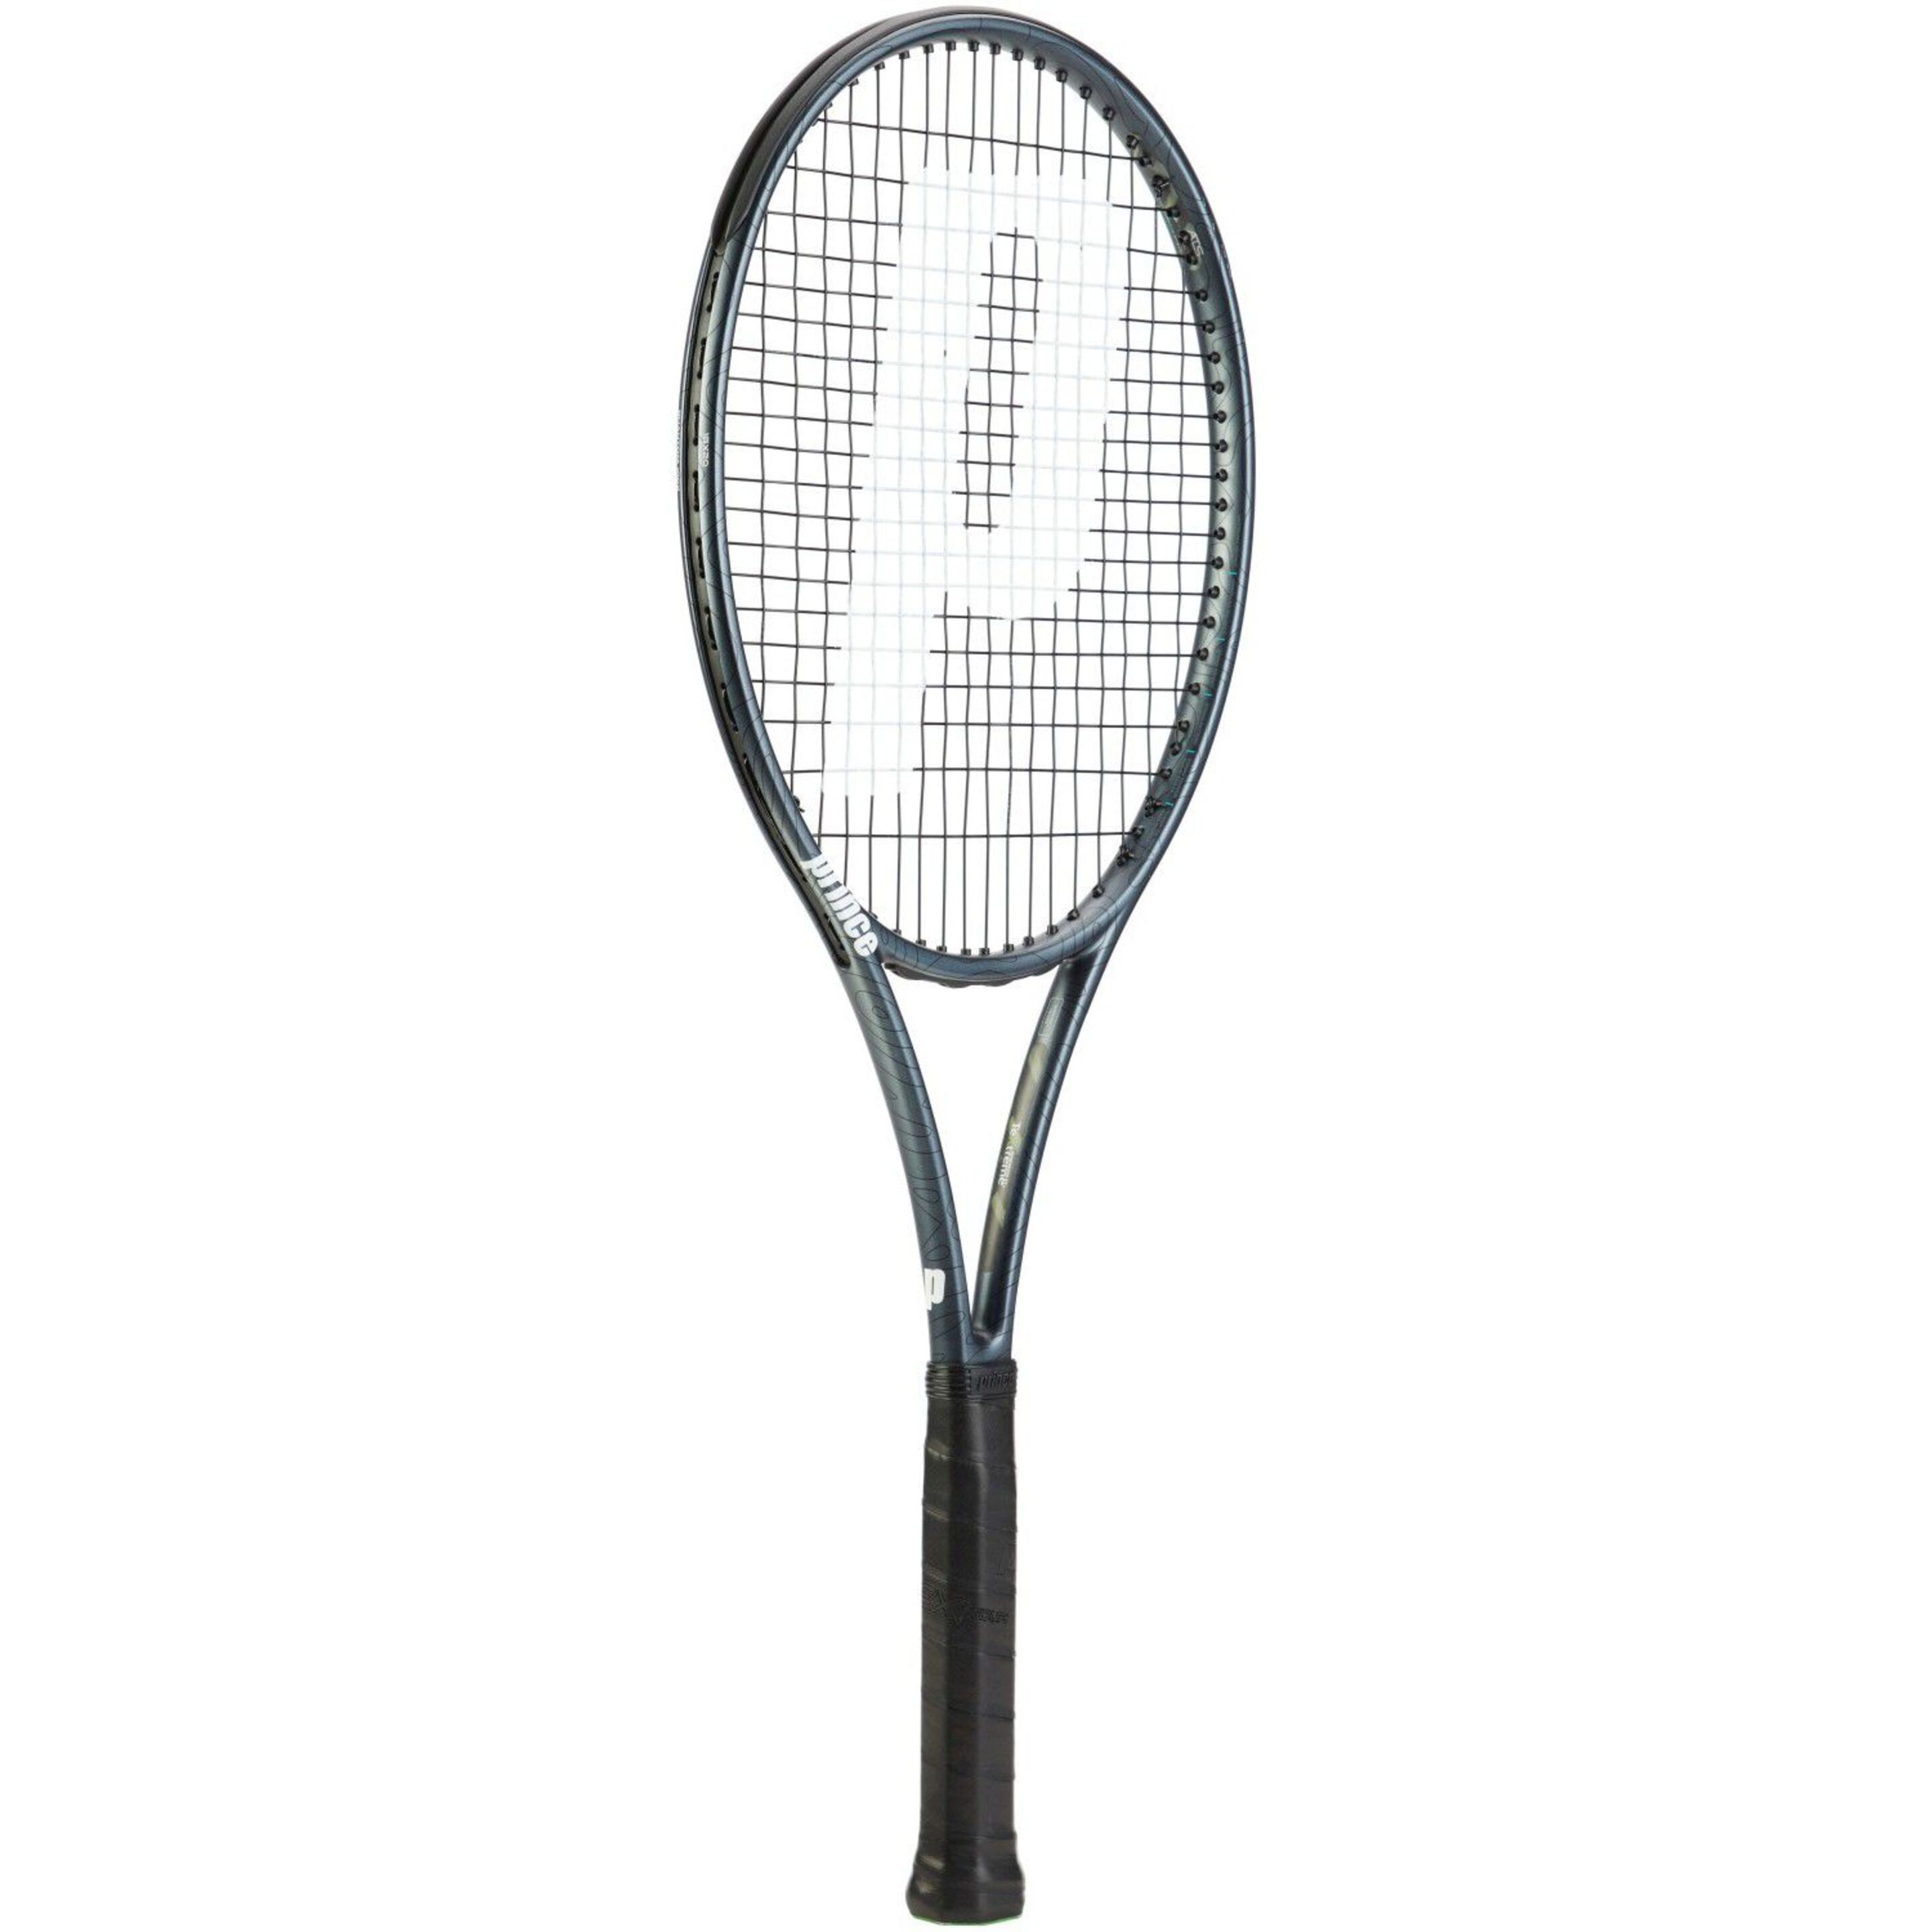 Raqueta De Tenis Prince Txt2.5 Phantom 100x (18x20) 320 G (sin Encordar Y Sin Funda) - gris - 